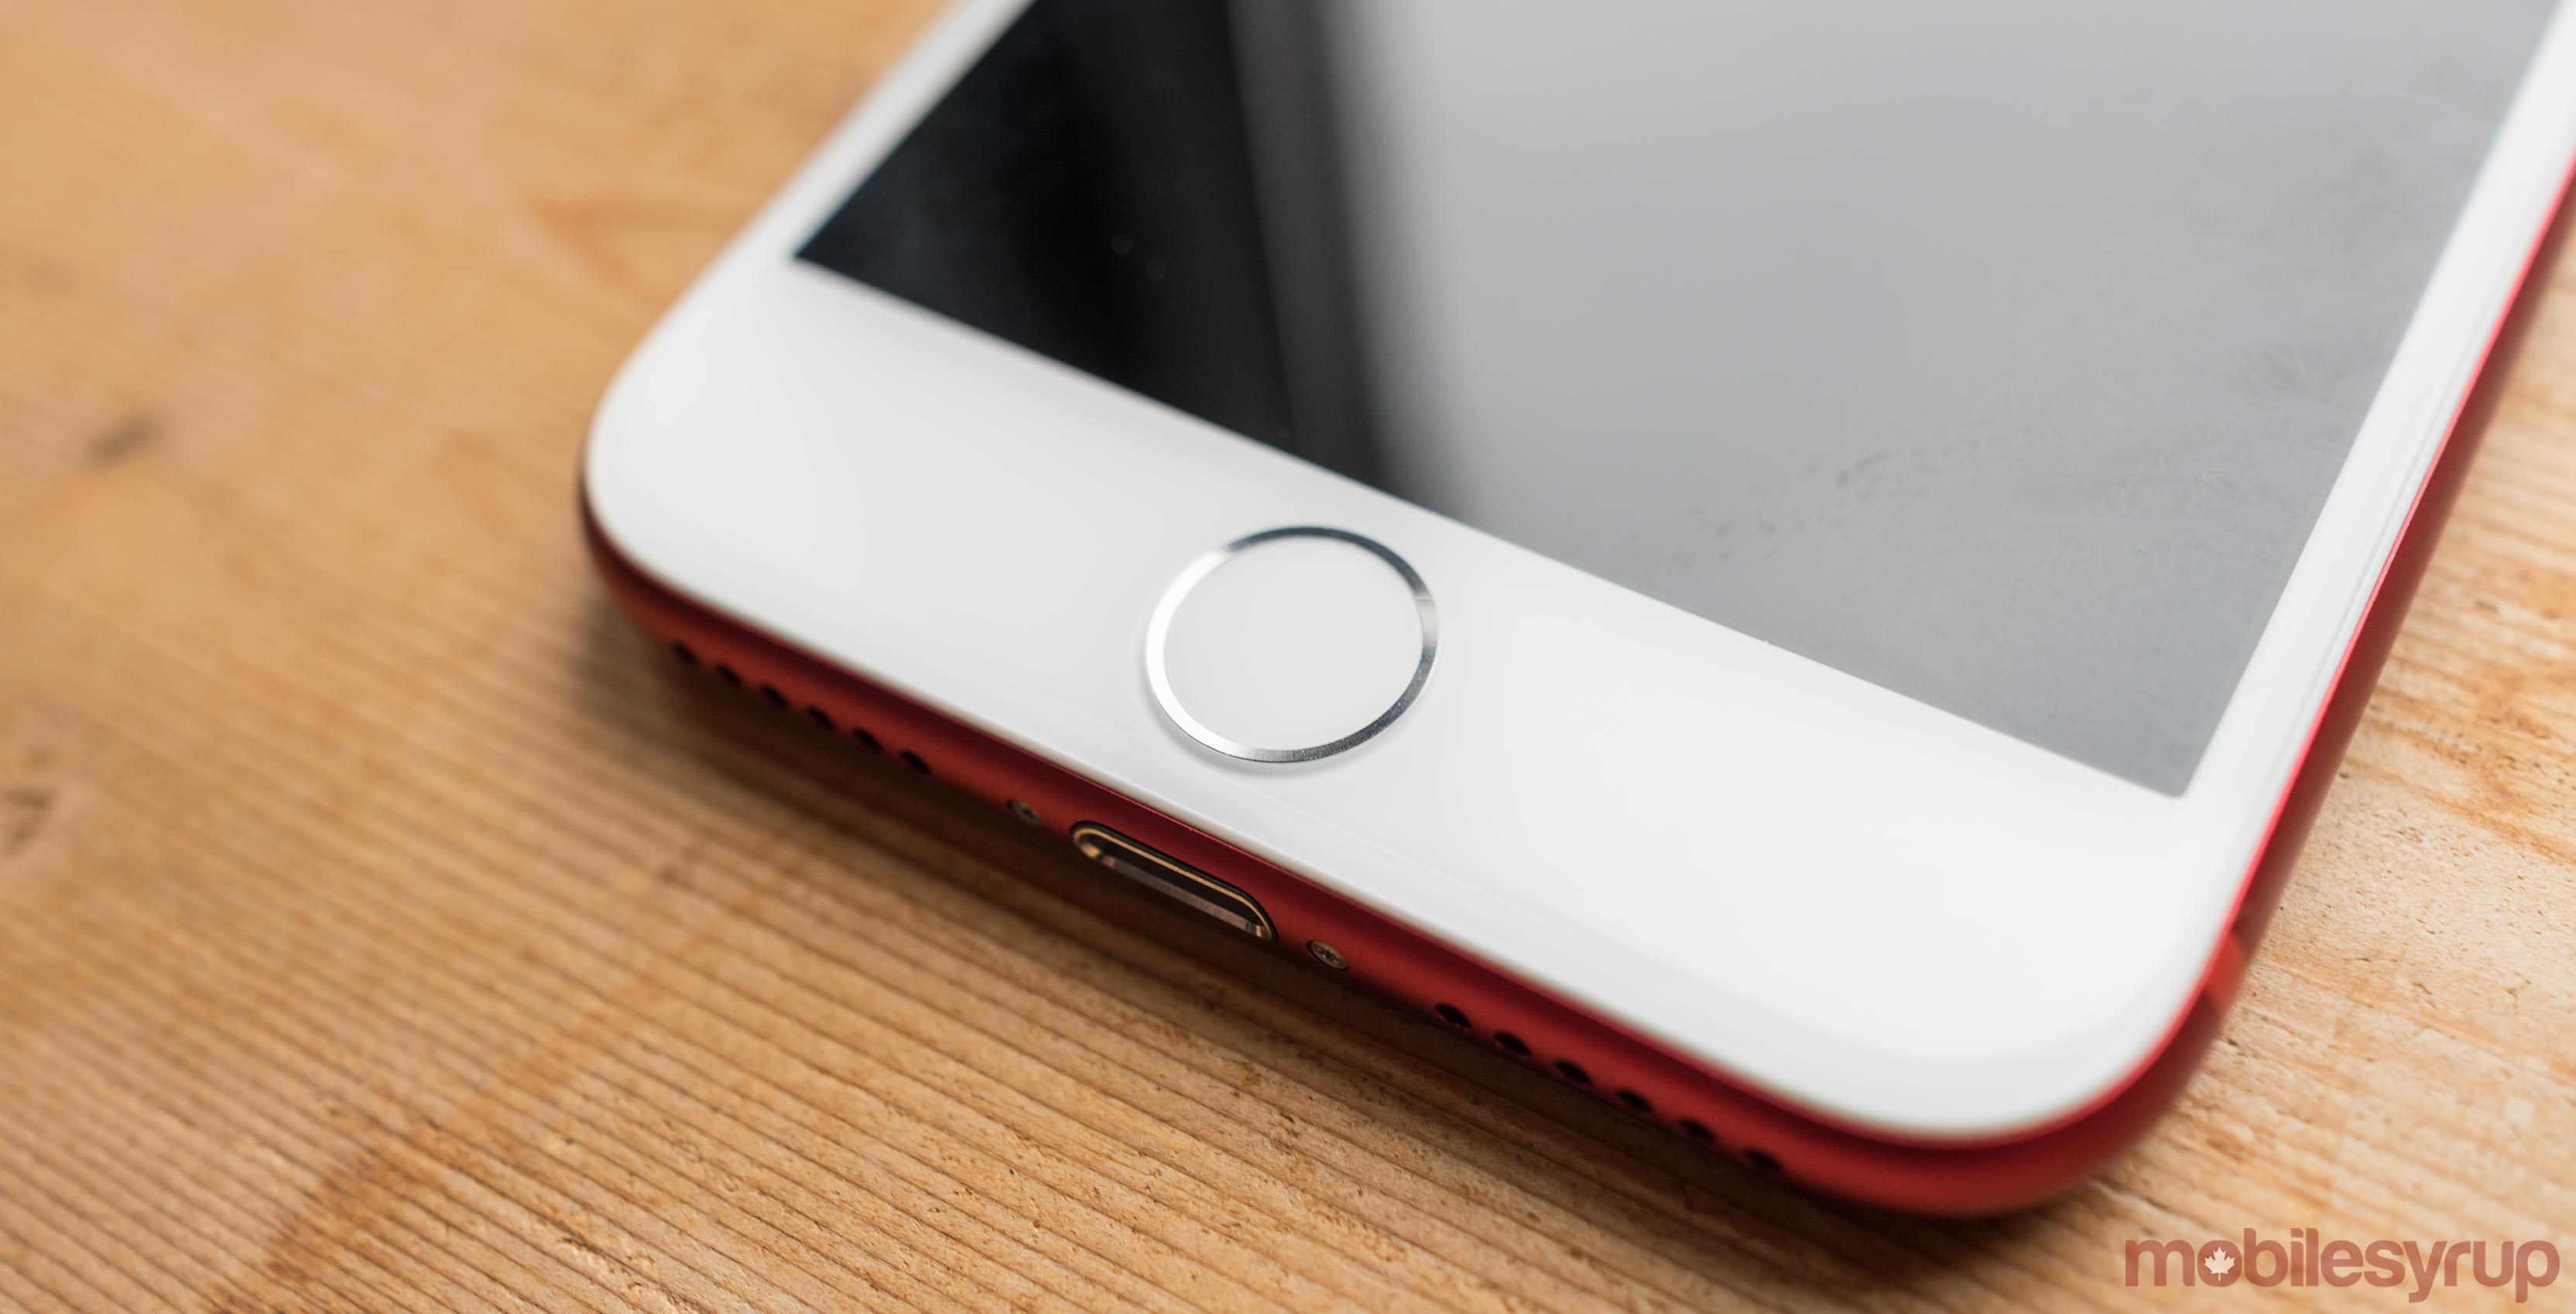 the iPhone 7's fingerprint sensor